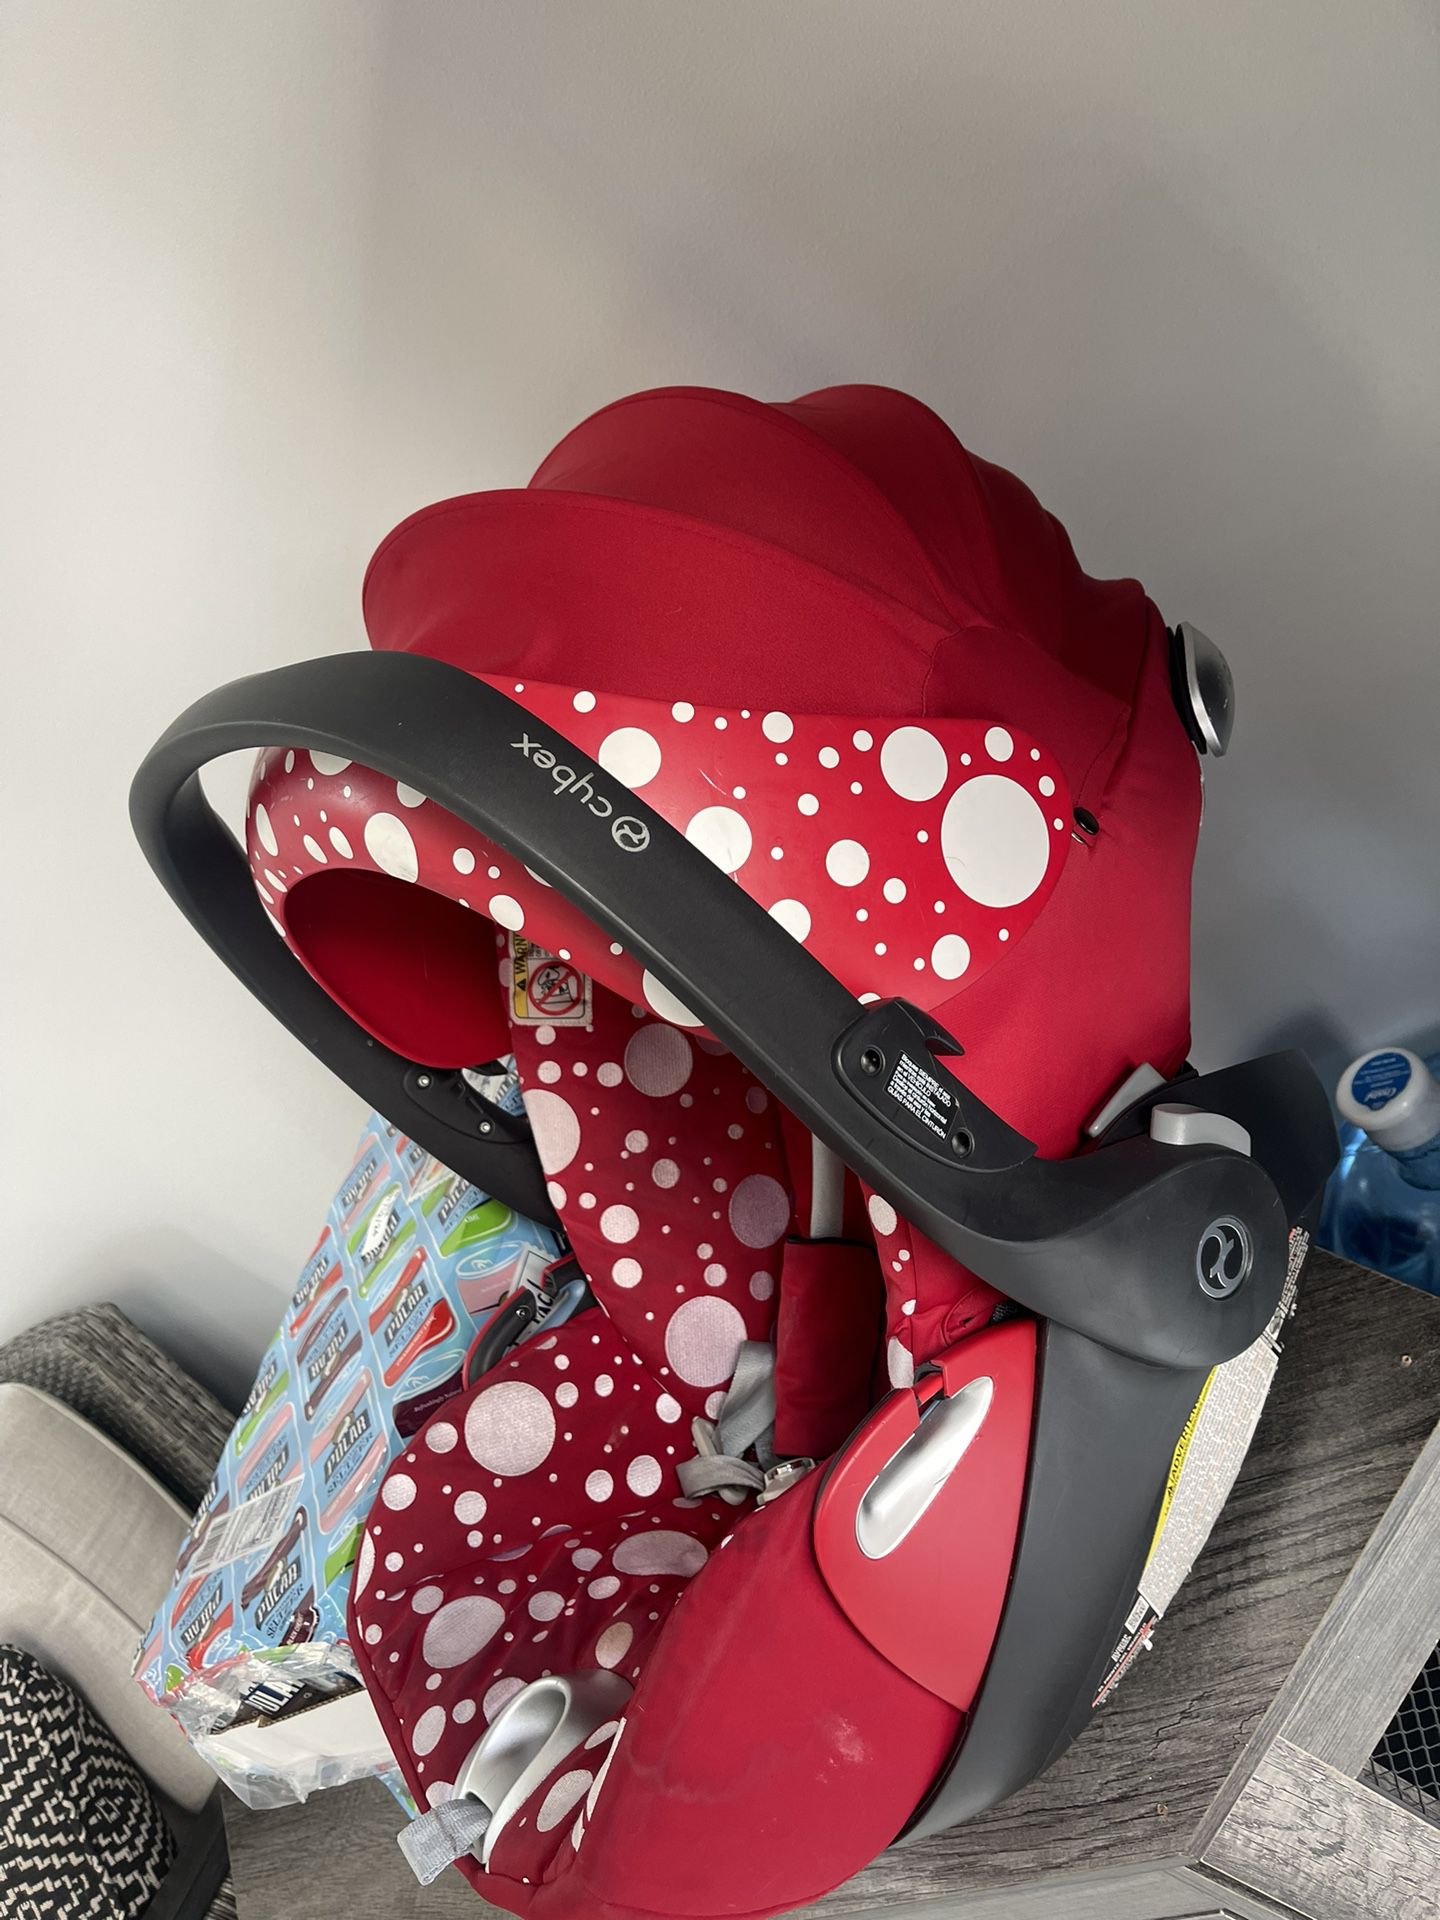 Cybex Cloud Q SensorSafe Reclining Infant Car Seat - Petticoat Red by Jeremy Scott